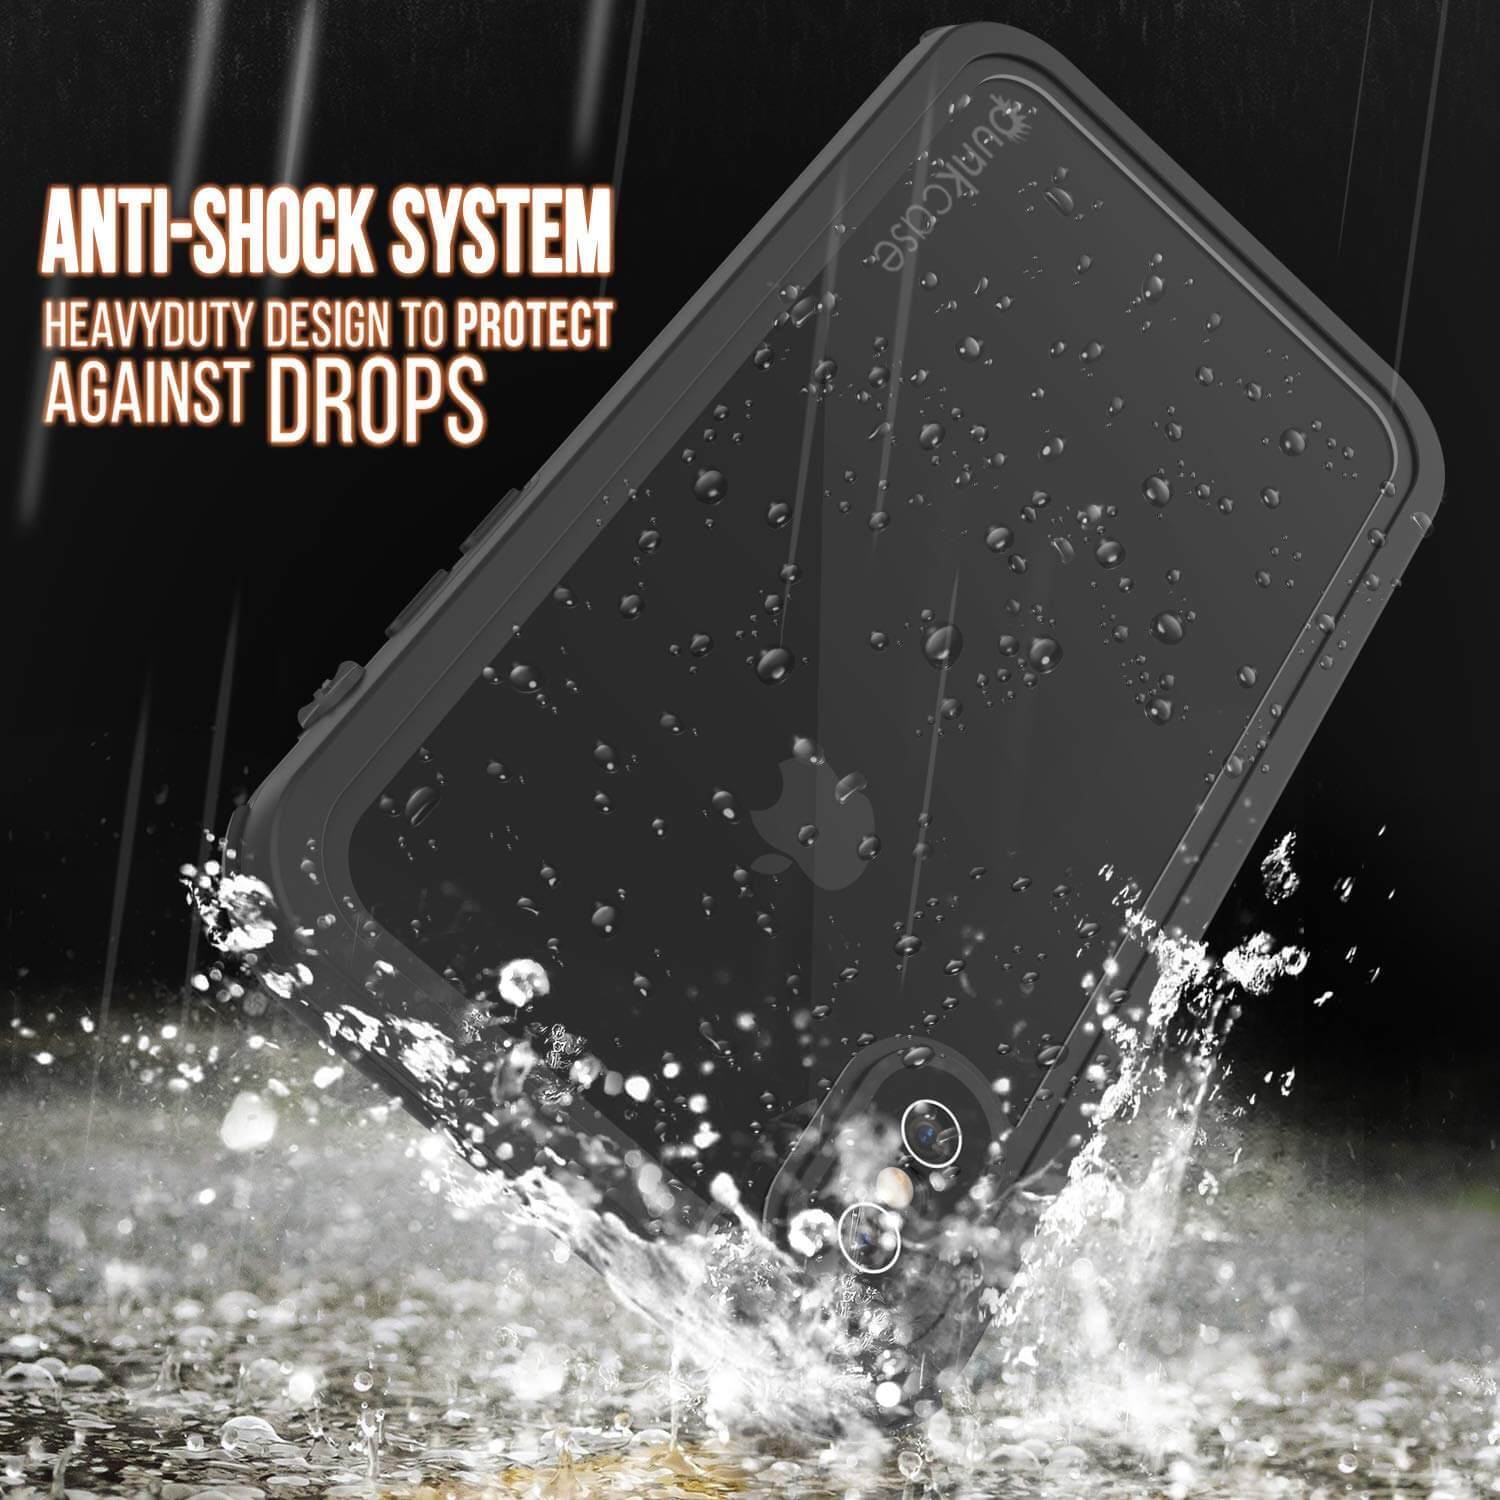 iPhone XS Waterproof IP68 Case, Punkcase [teal] [Rapture Series]  W/Built in Screen Protector